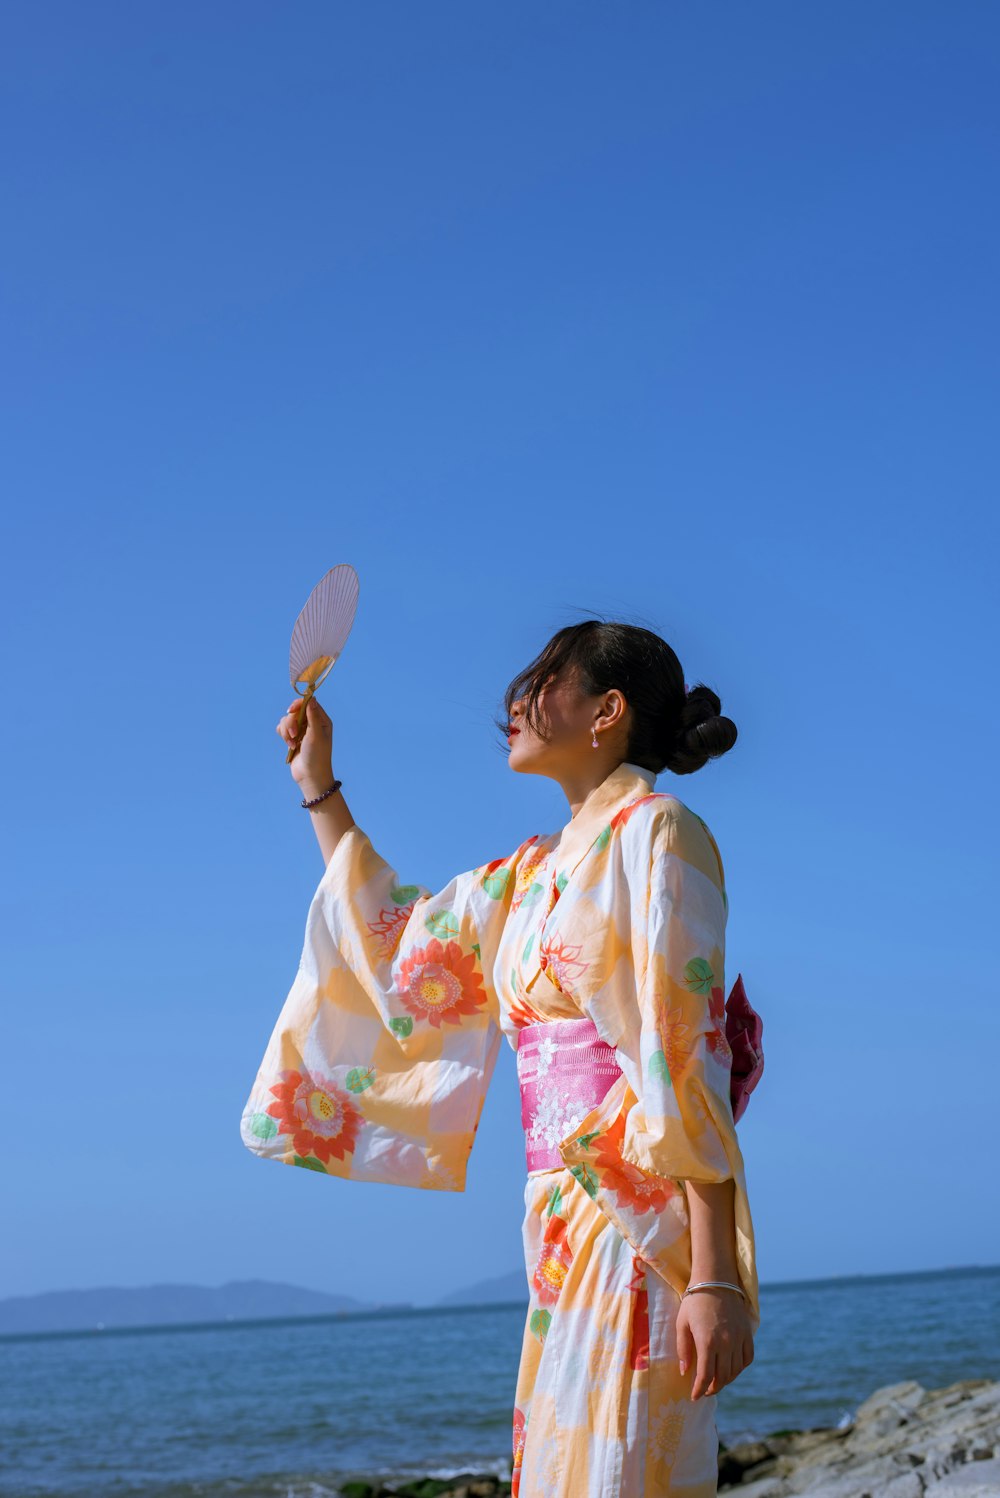 a woman standing on a beach holding a fan